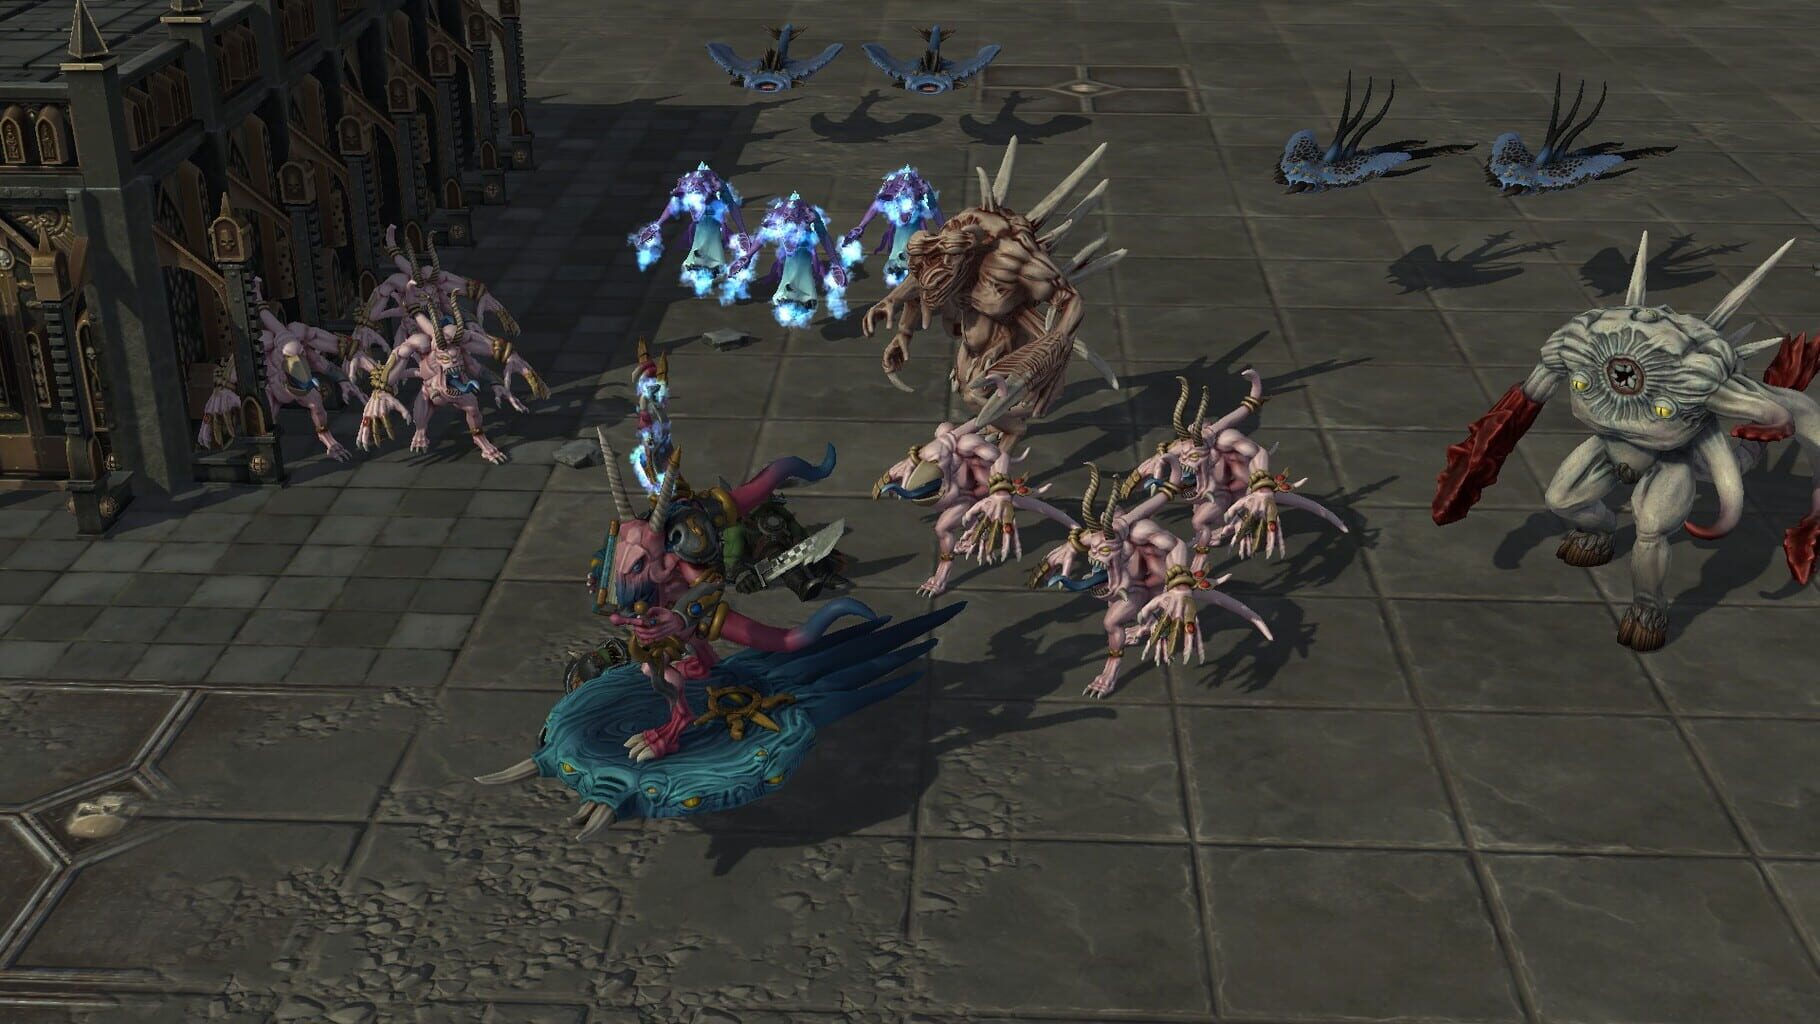 Captura de pantalla - Warhammer 40,000: Sanctus Reach - Horrors of the Warp